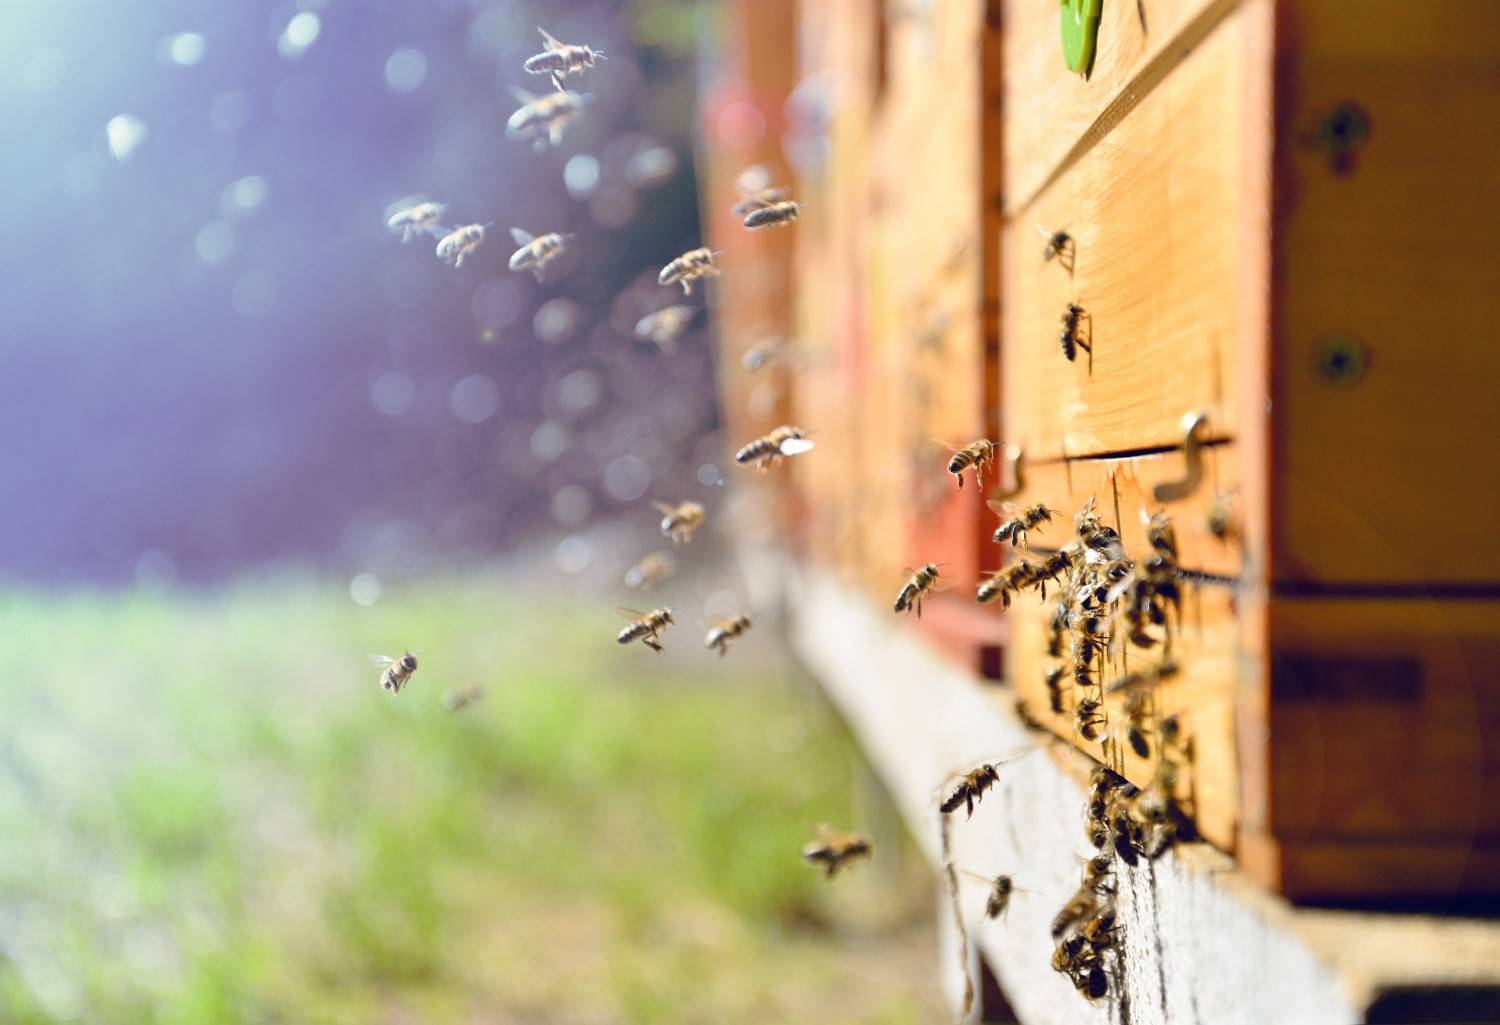 Vegetation helps wild honeybees survive the winter •